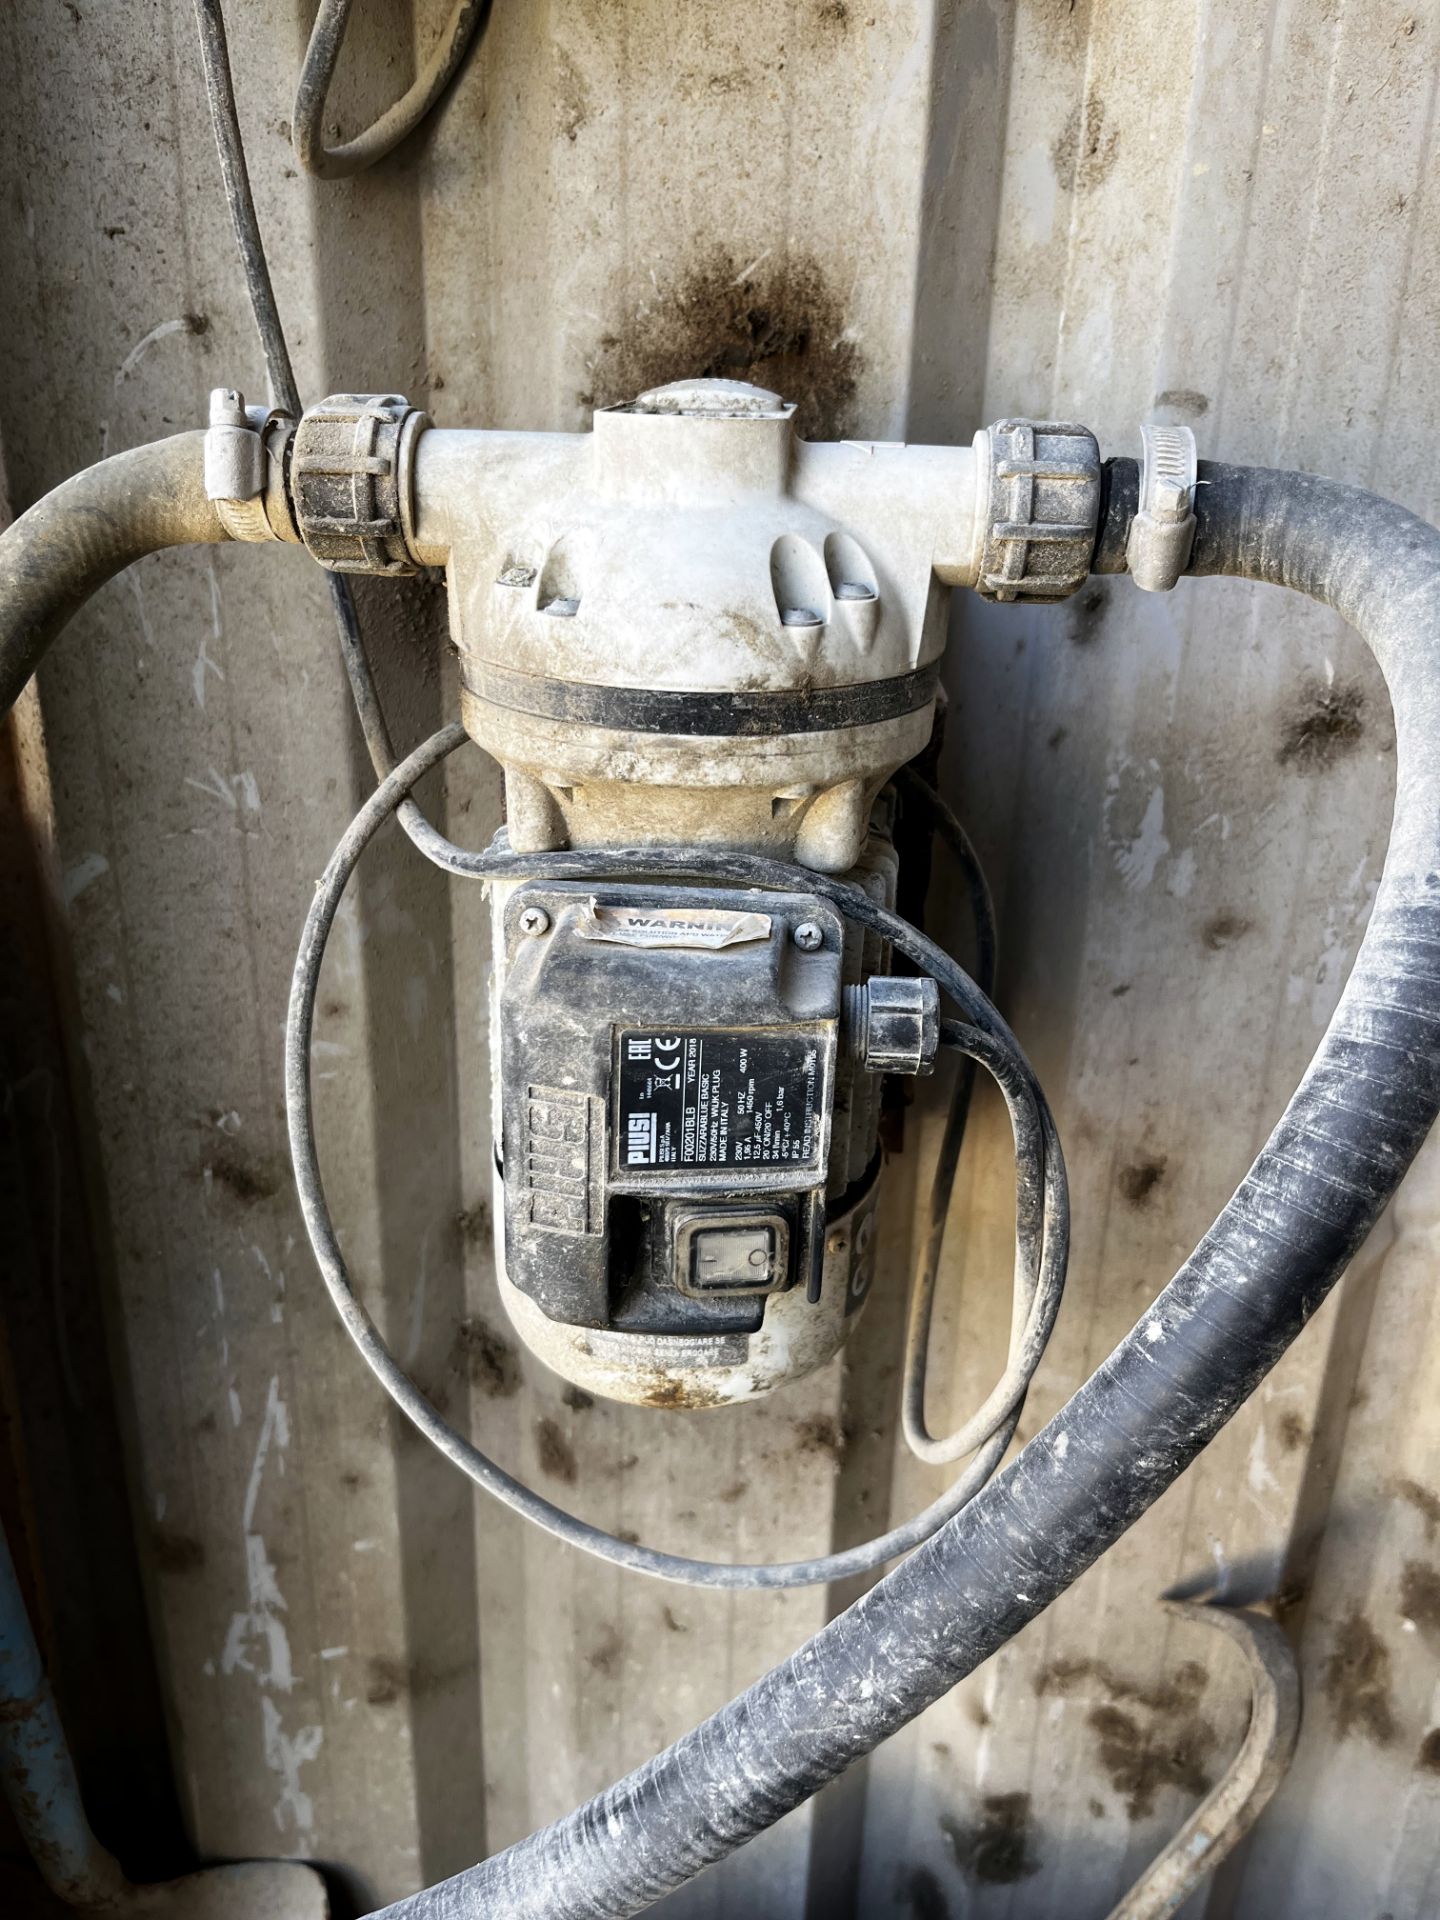 ADBLUE Tank & Dispenser (Part Used) with Piusi F00201BLB 2018 Pump & Fuel Hose on Reel - Image 4 of 6